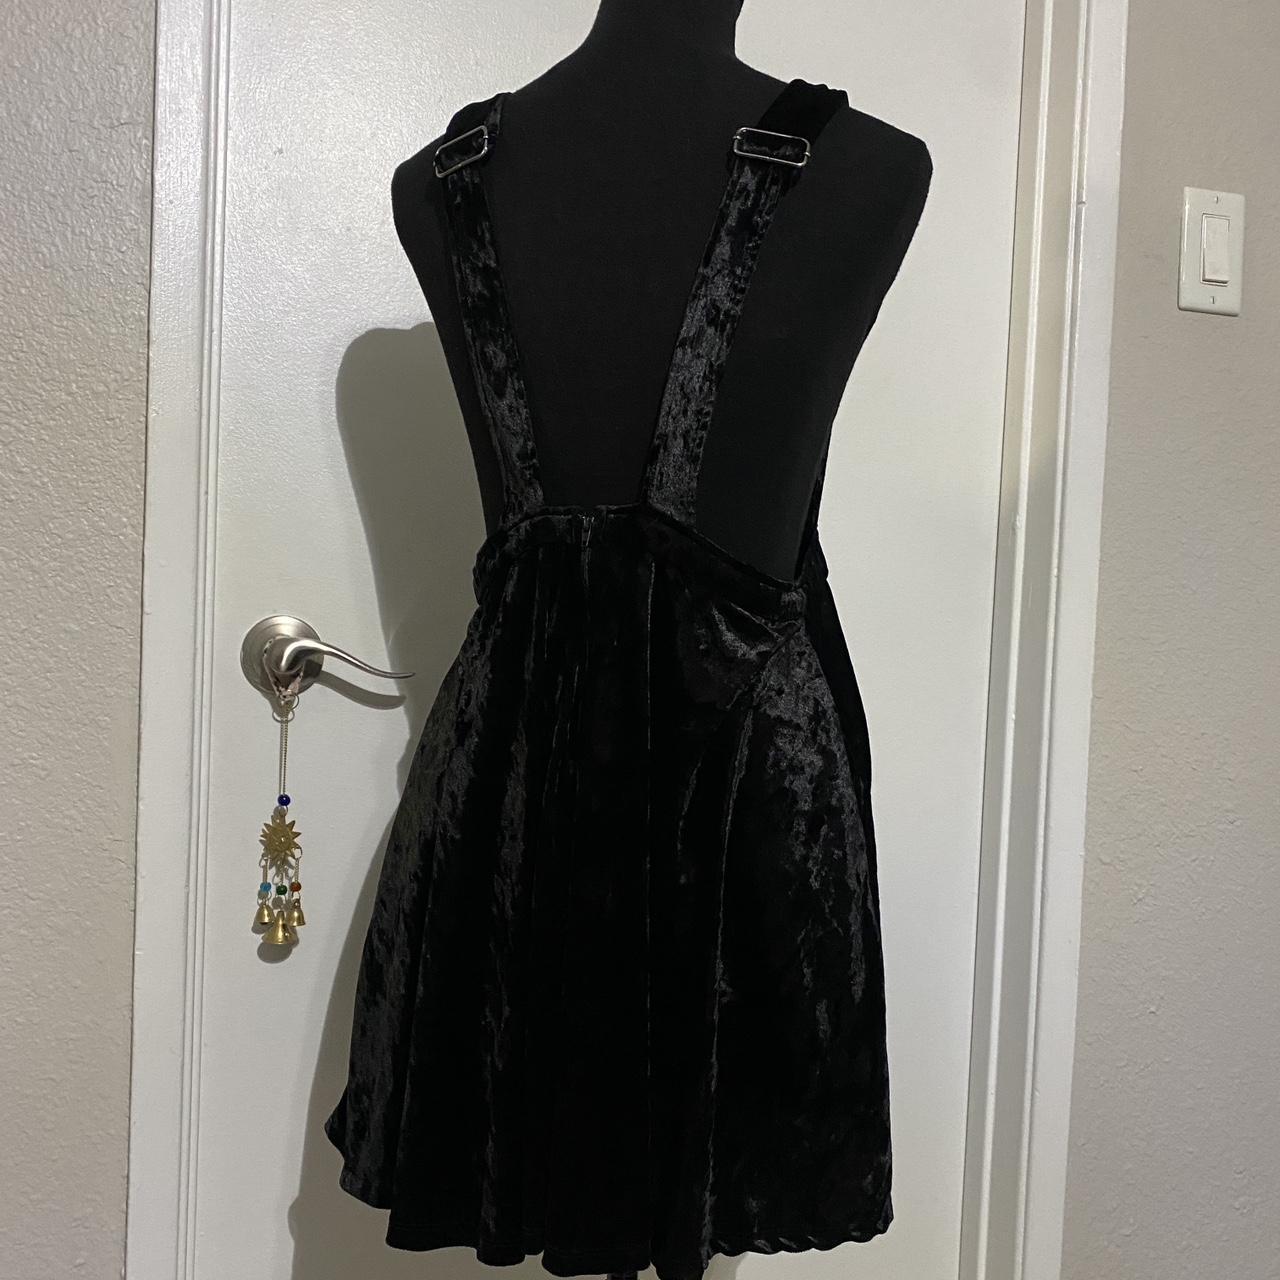 Hot Topic Women's Black Dress (4)